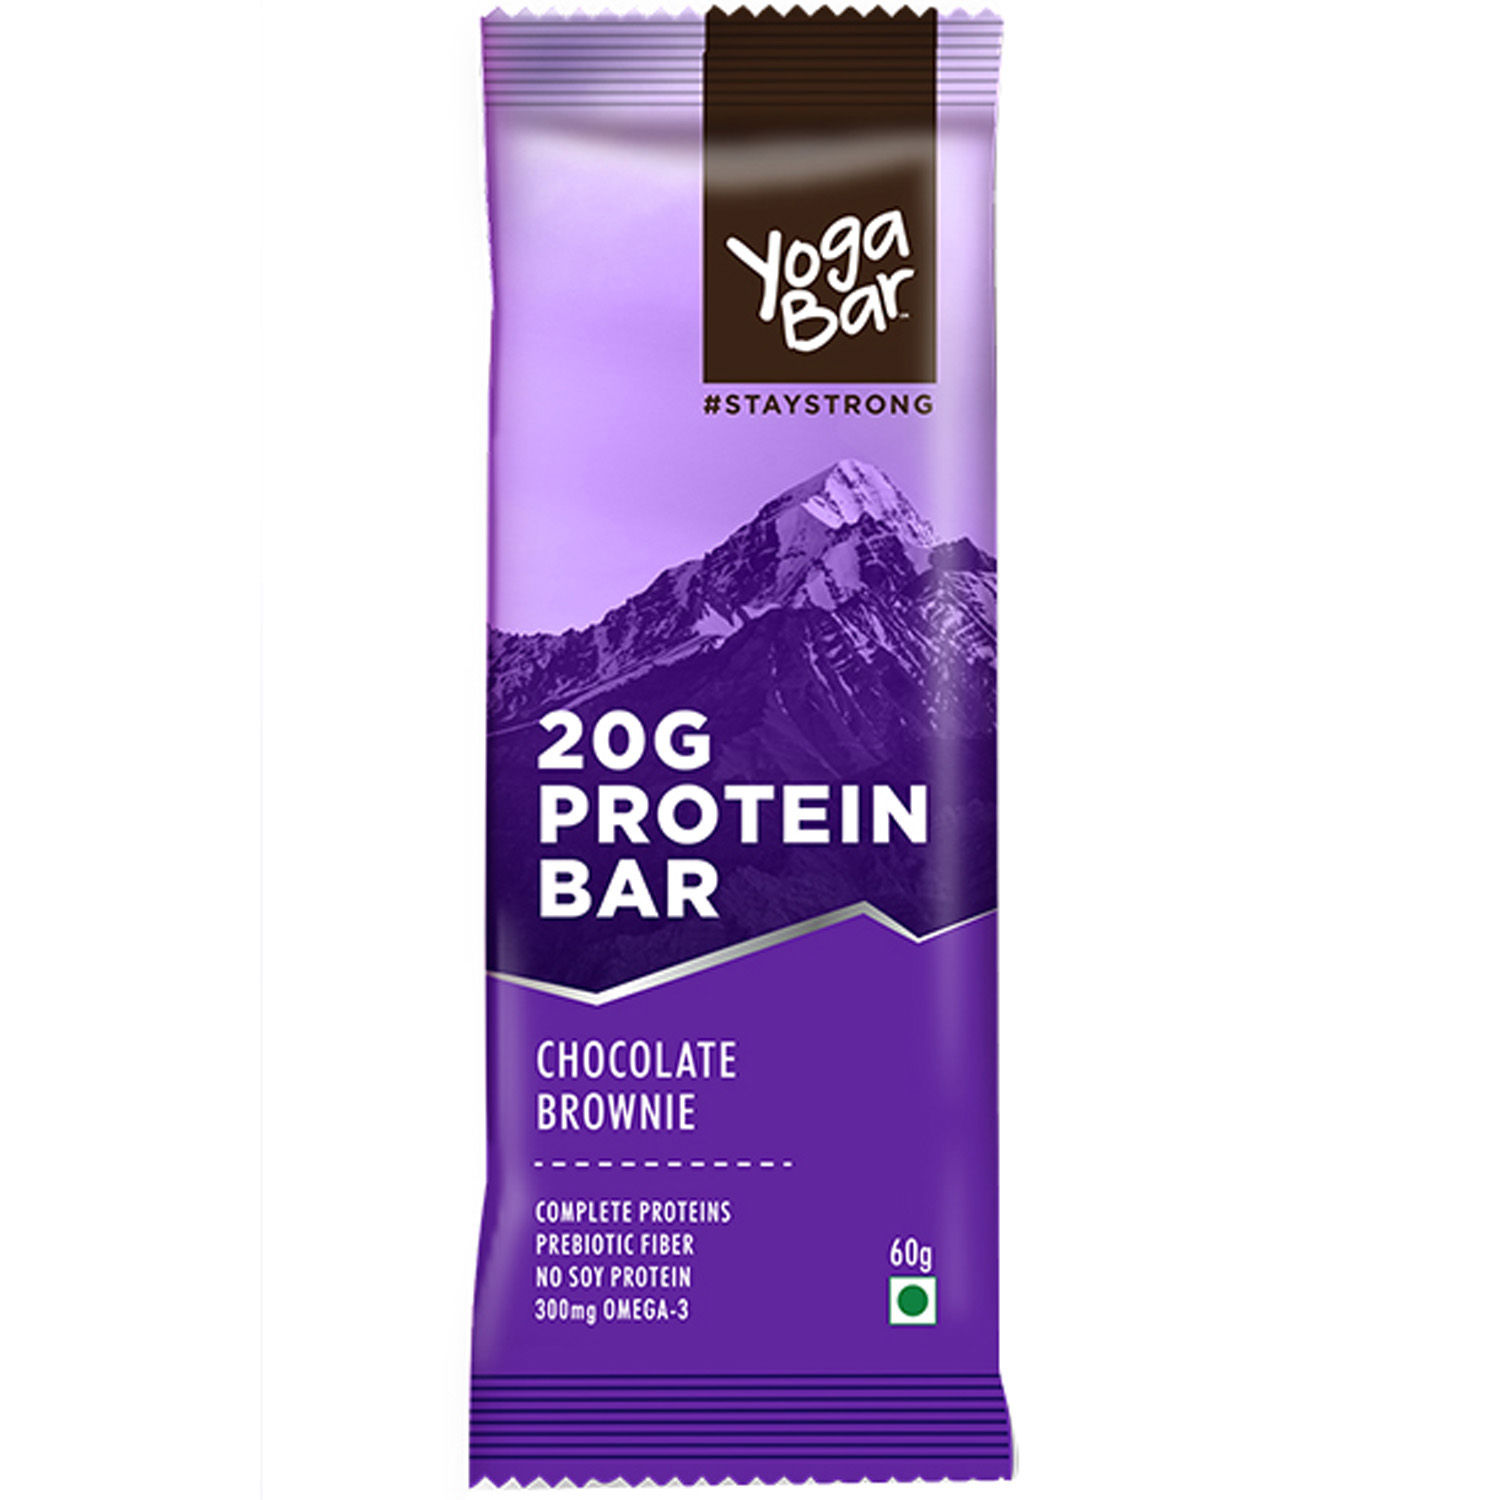 Yoga Bar Chocolate Brownie 20 gm Protein Bar, 60 gm, Pack of 1 